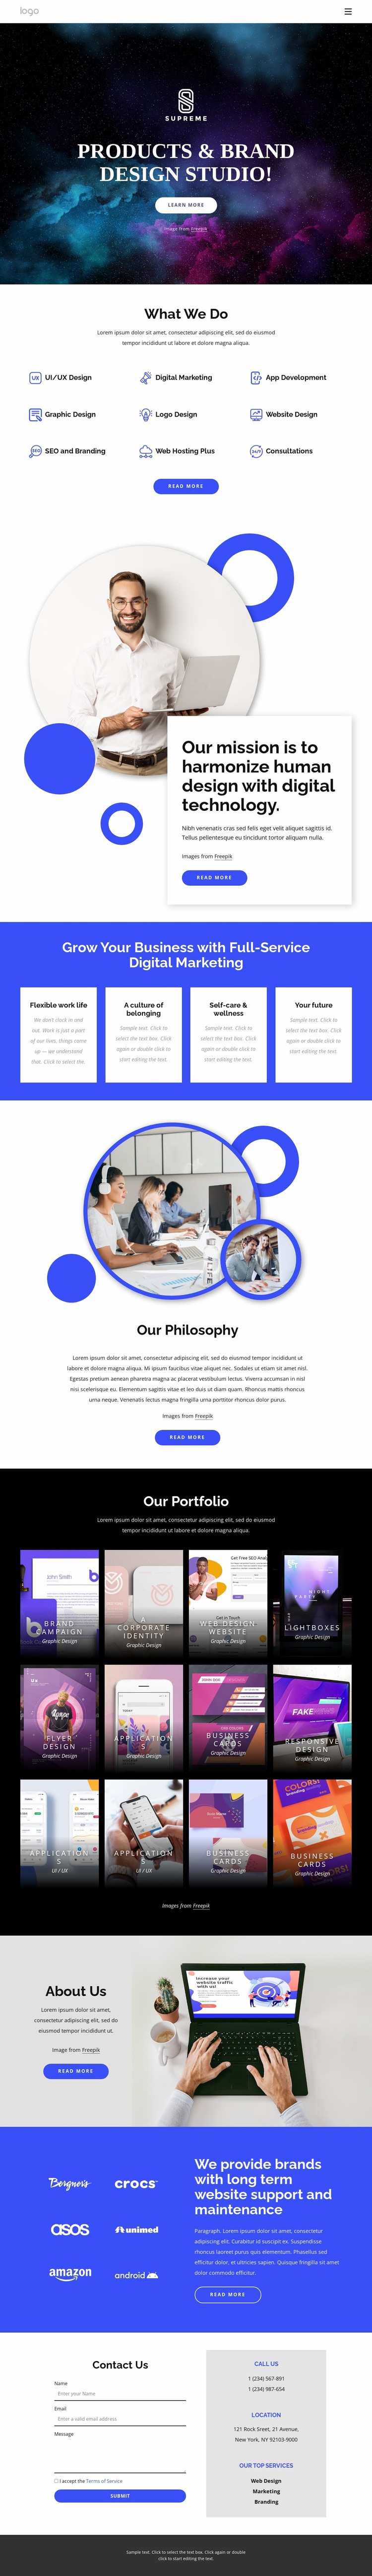 Products and brand design studio Website Design